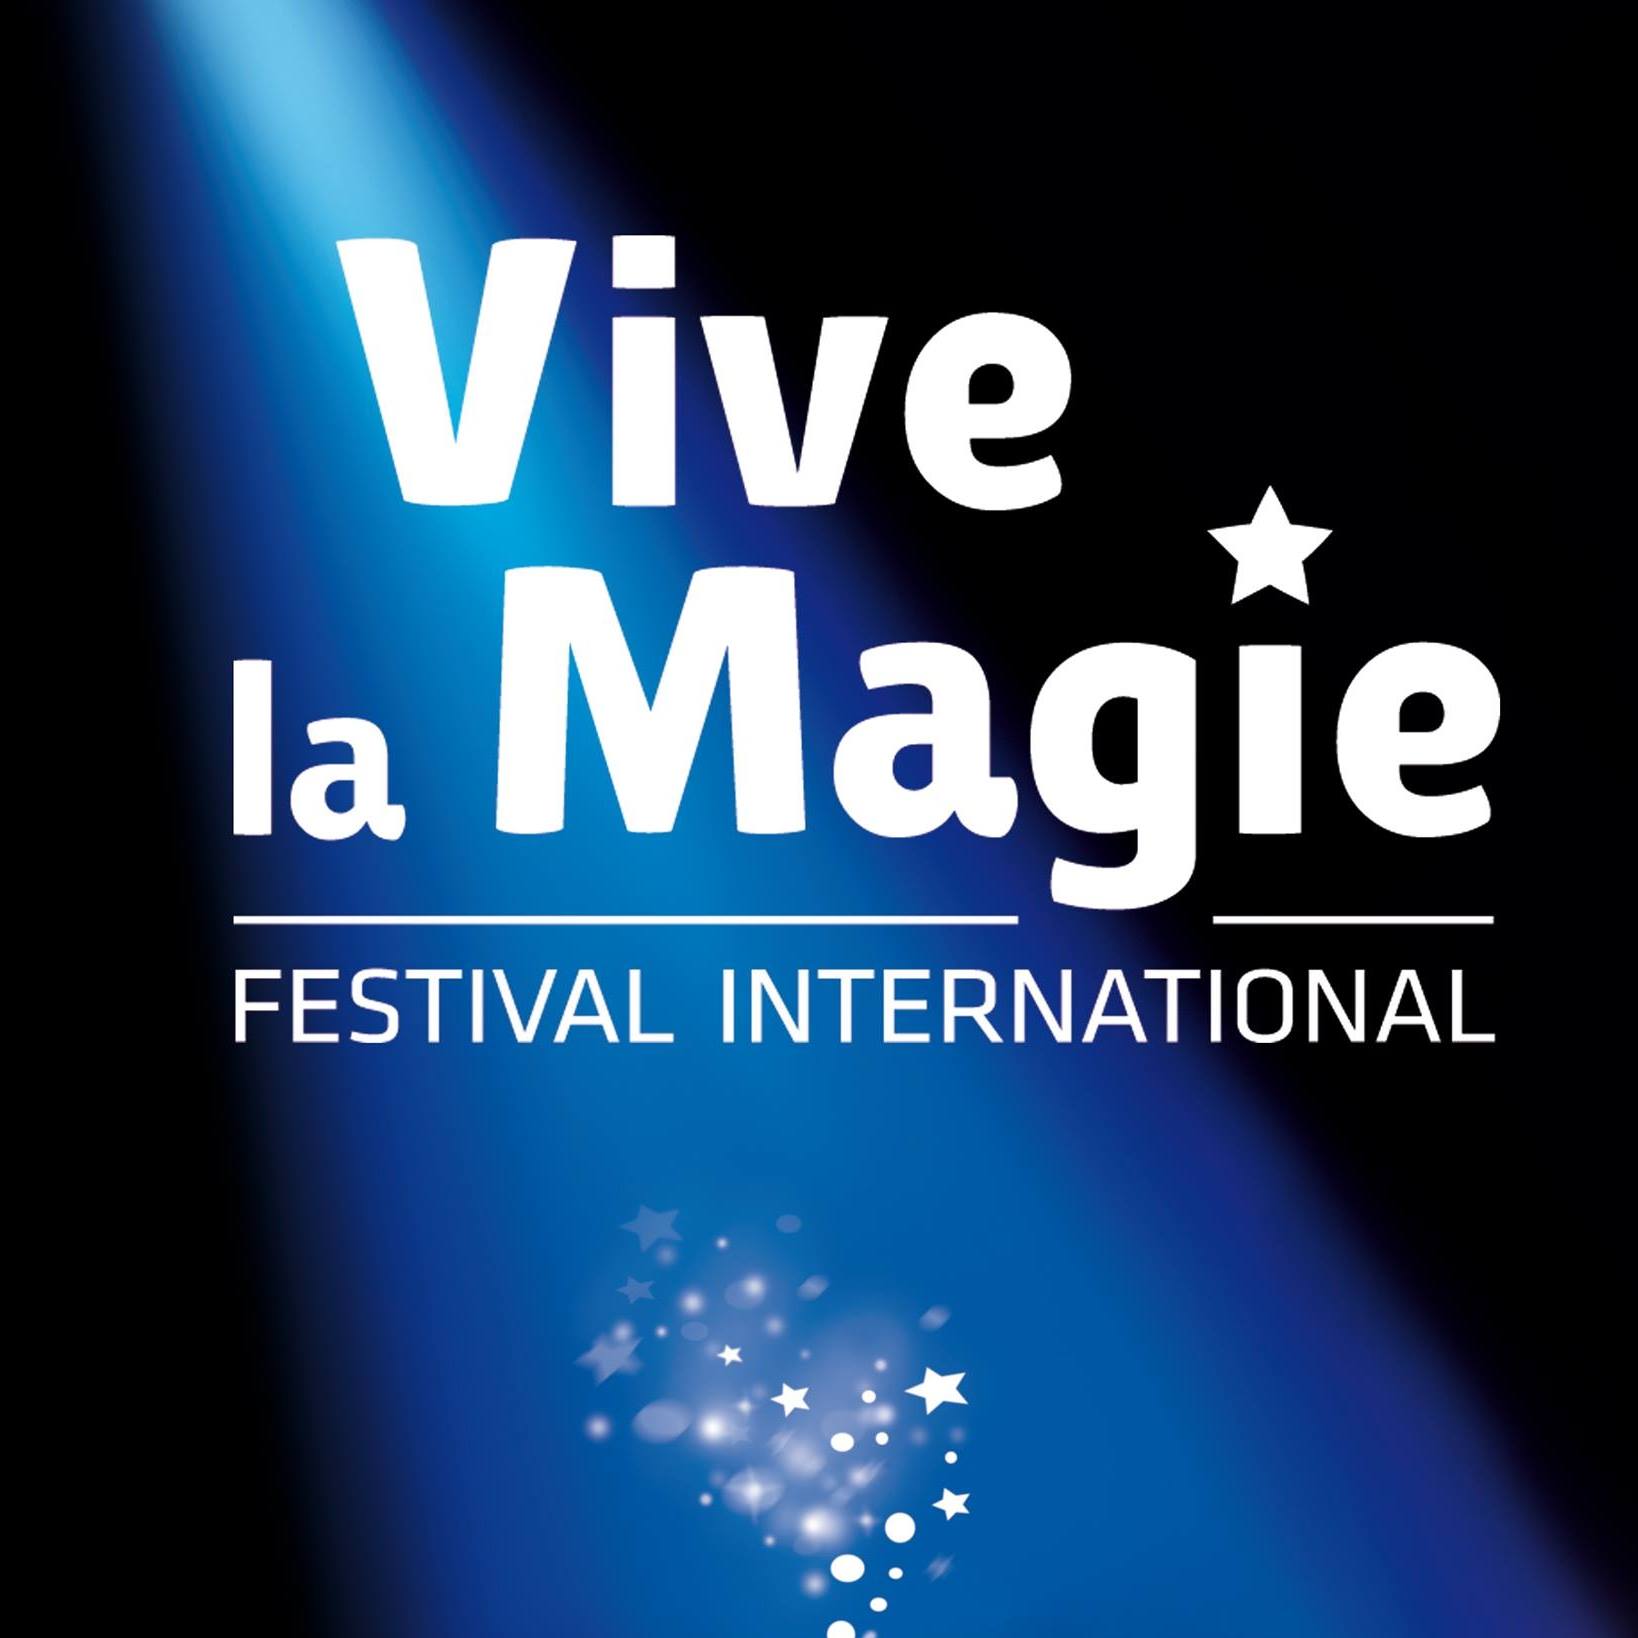 Festival International Vive La Magie 16ieme Edition at Les Angenoises Tickets